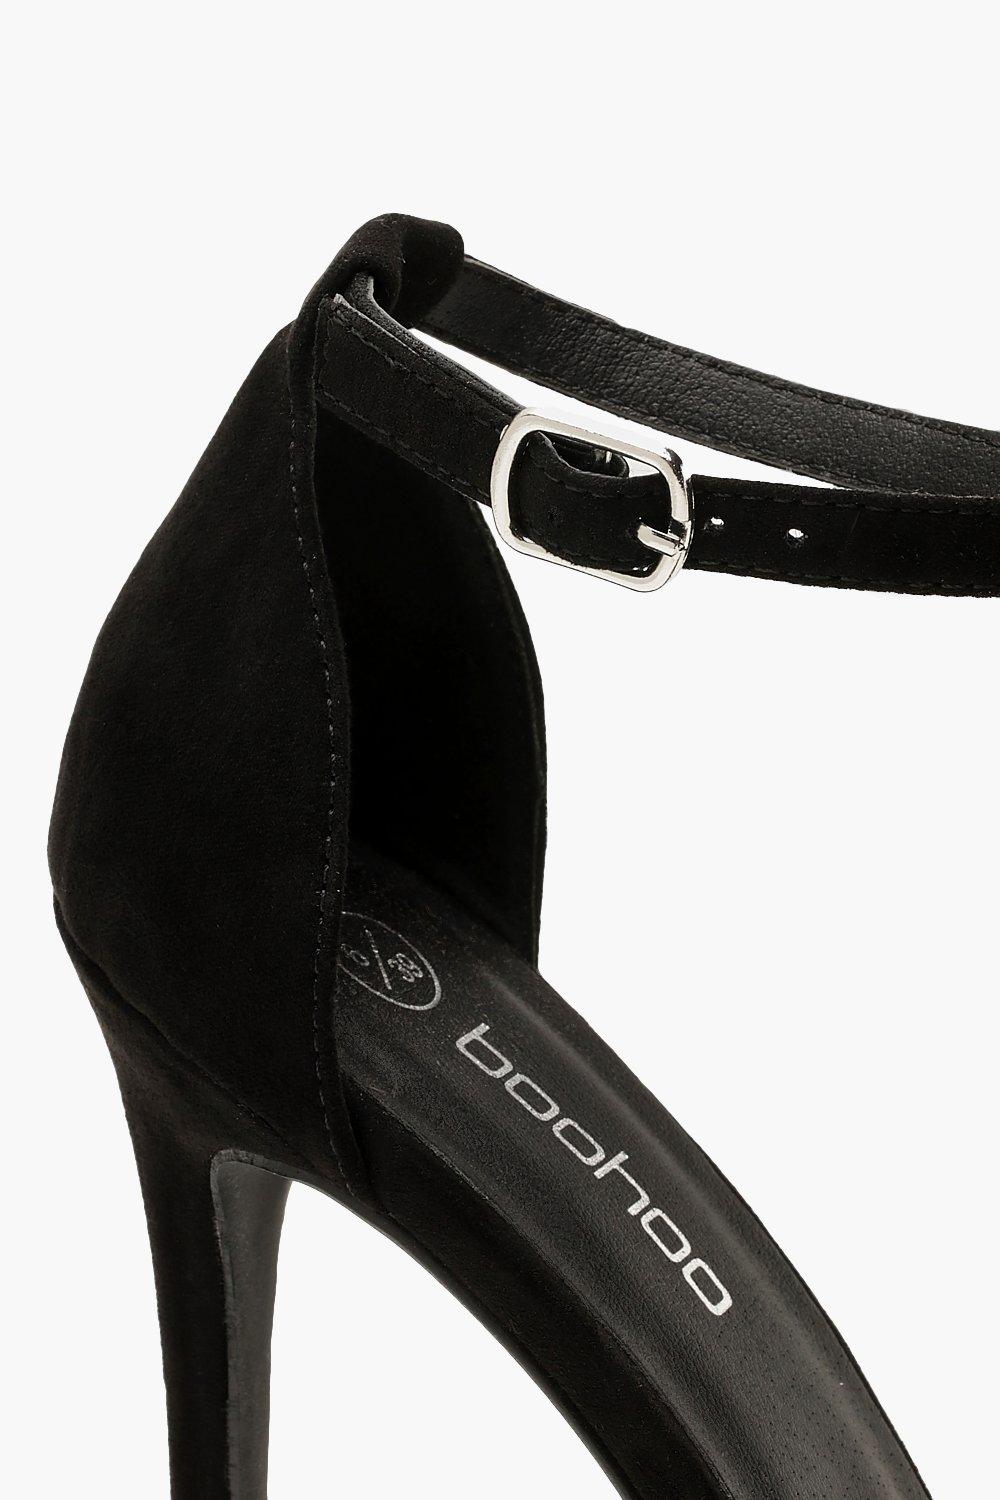 wide fit stiletto heels